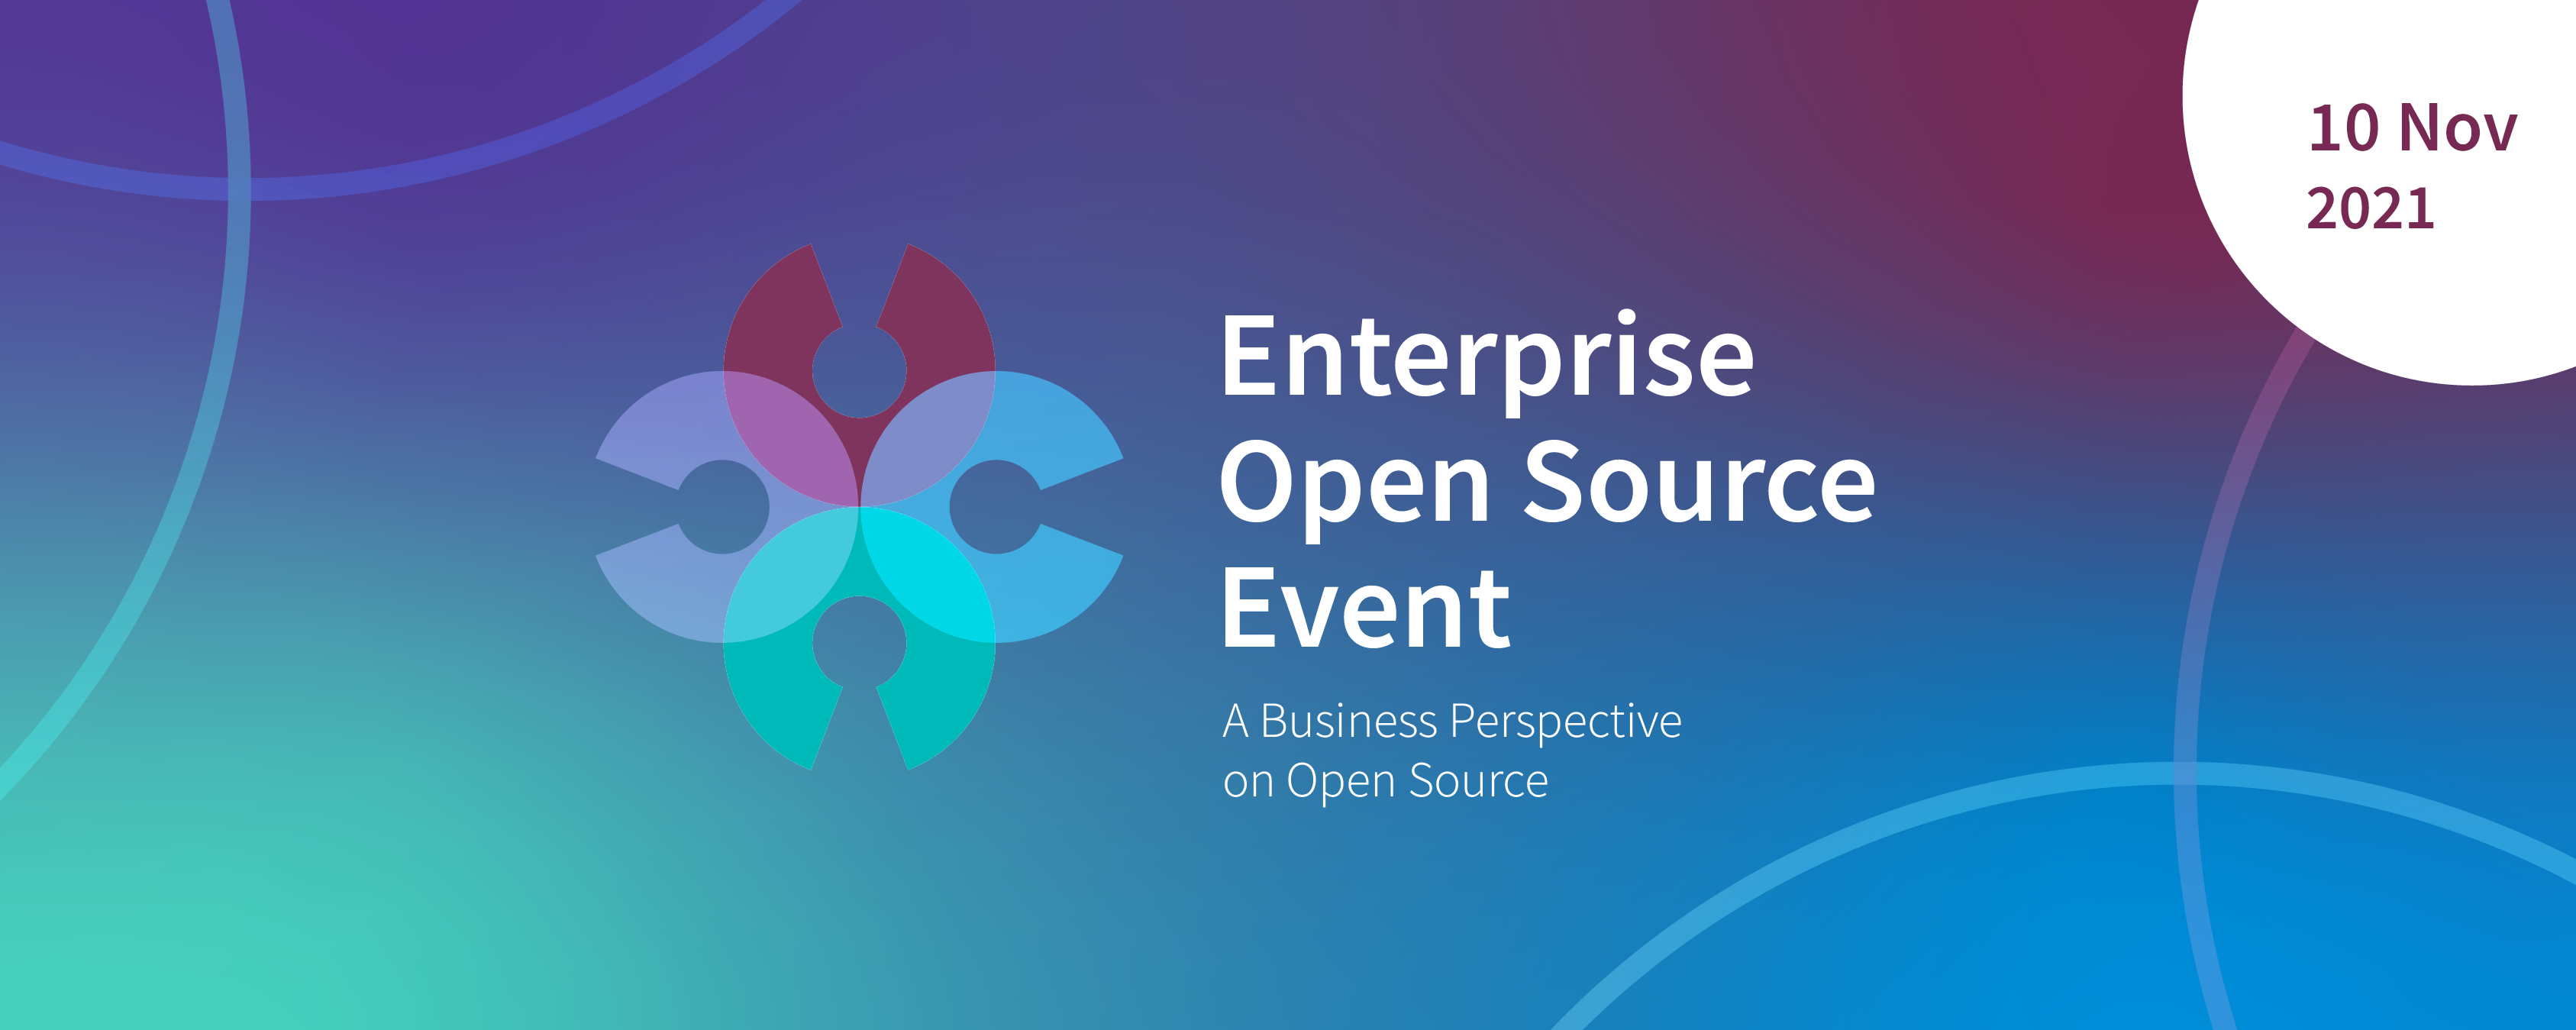 Enterprise Open Source